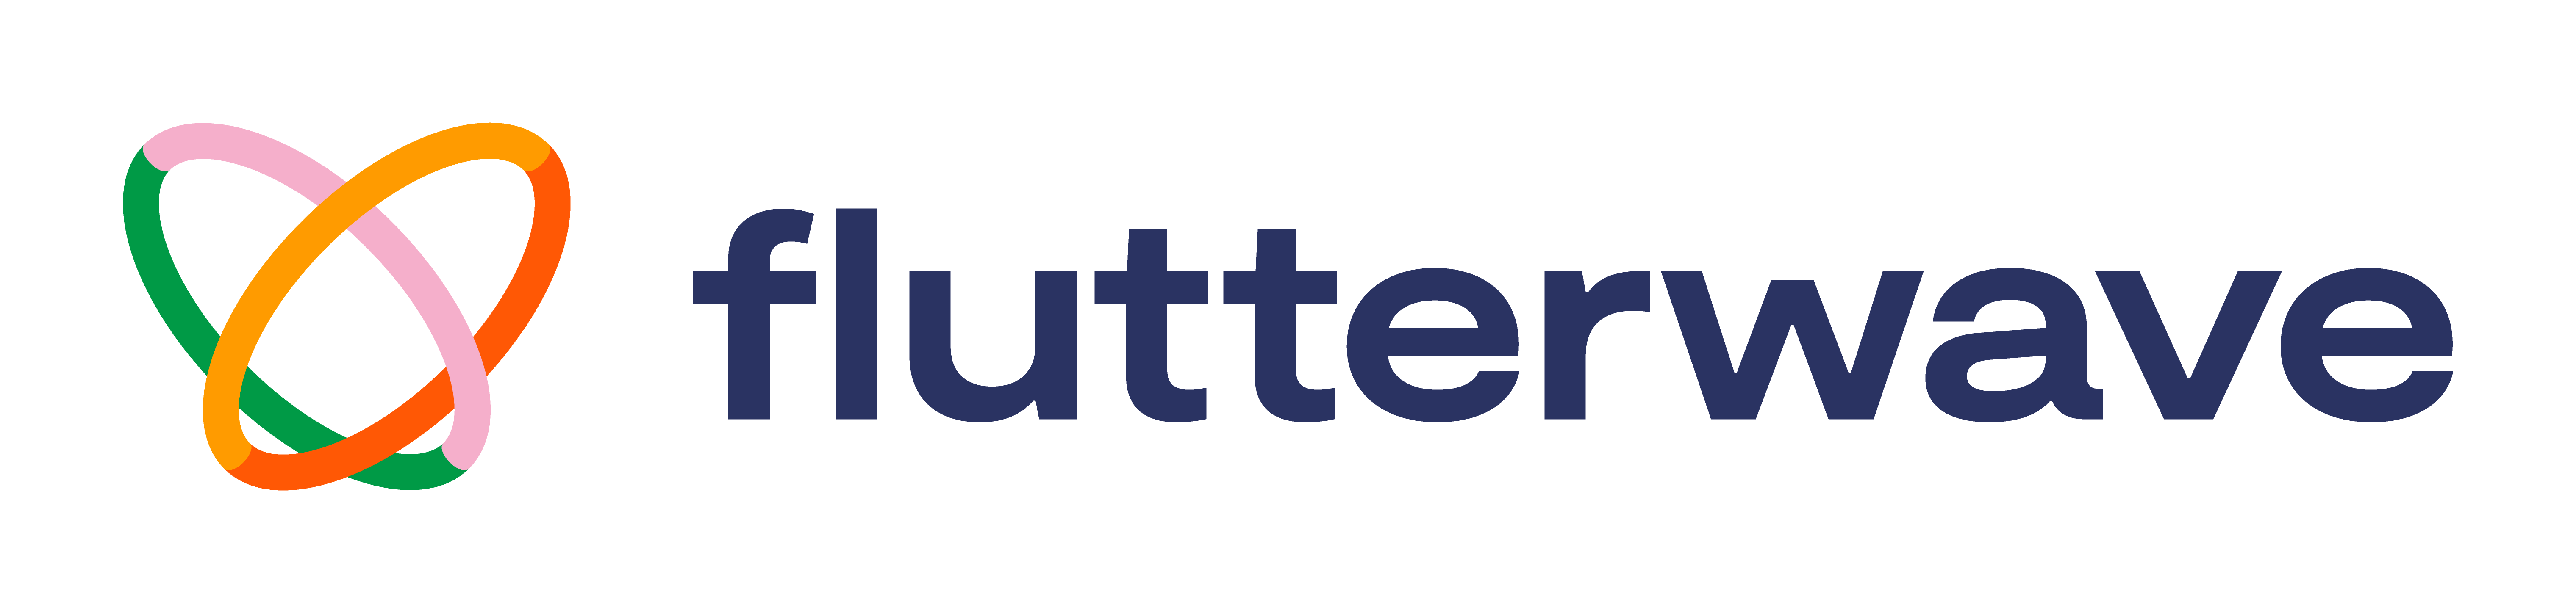 Flutterwave_Logo